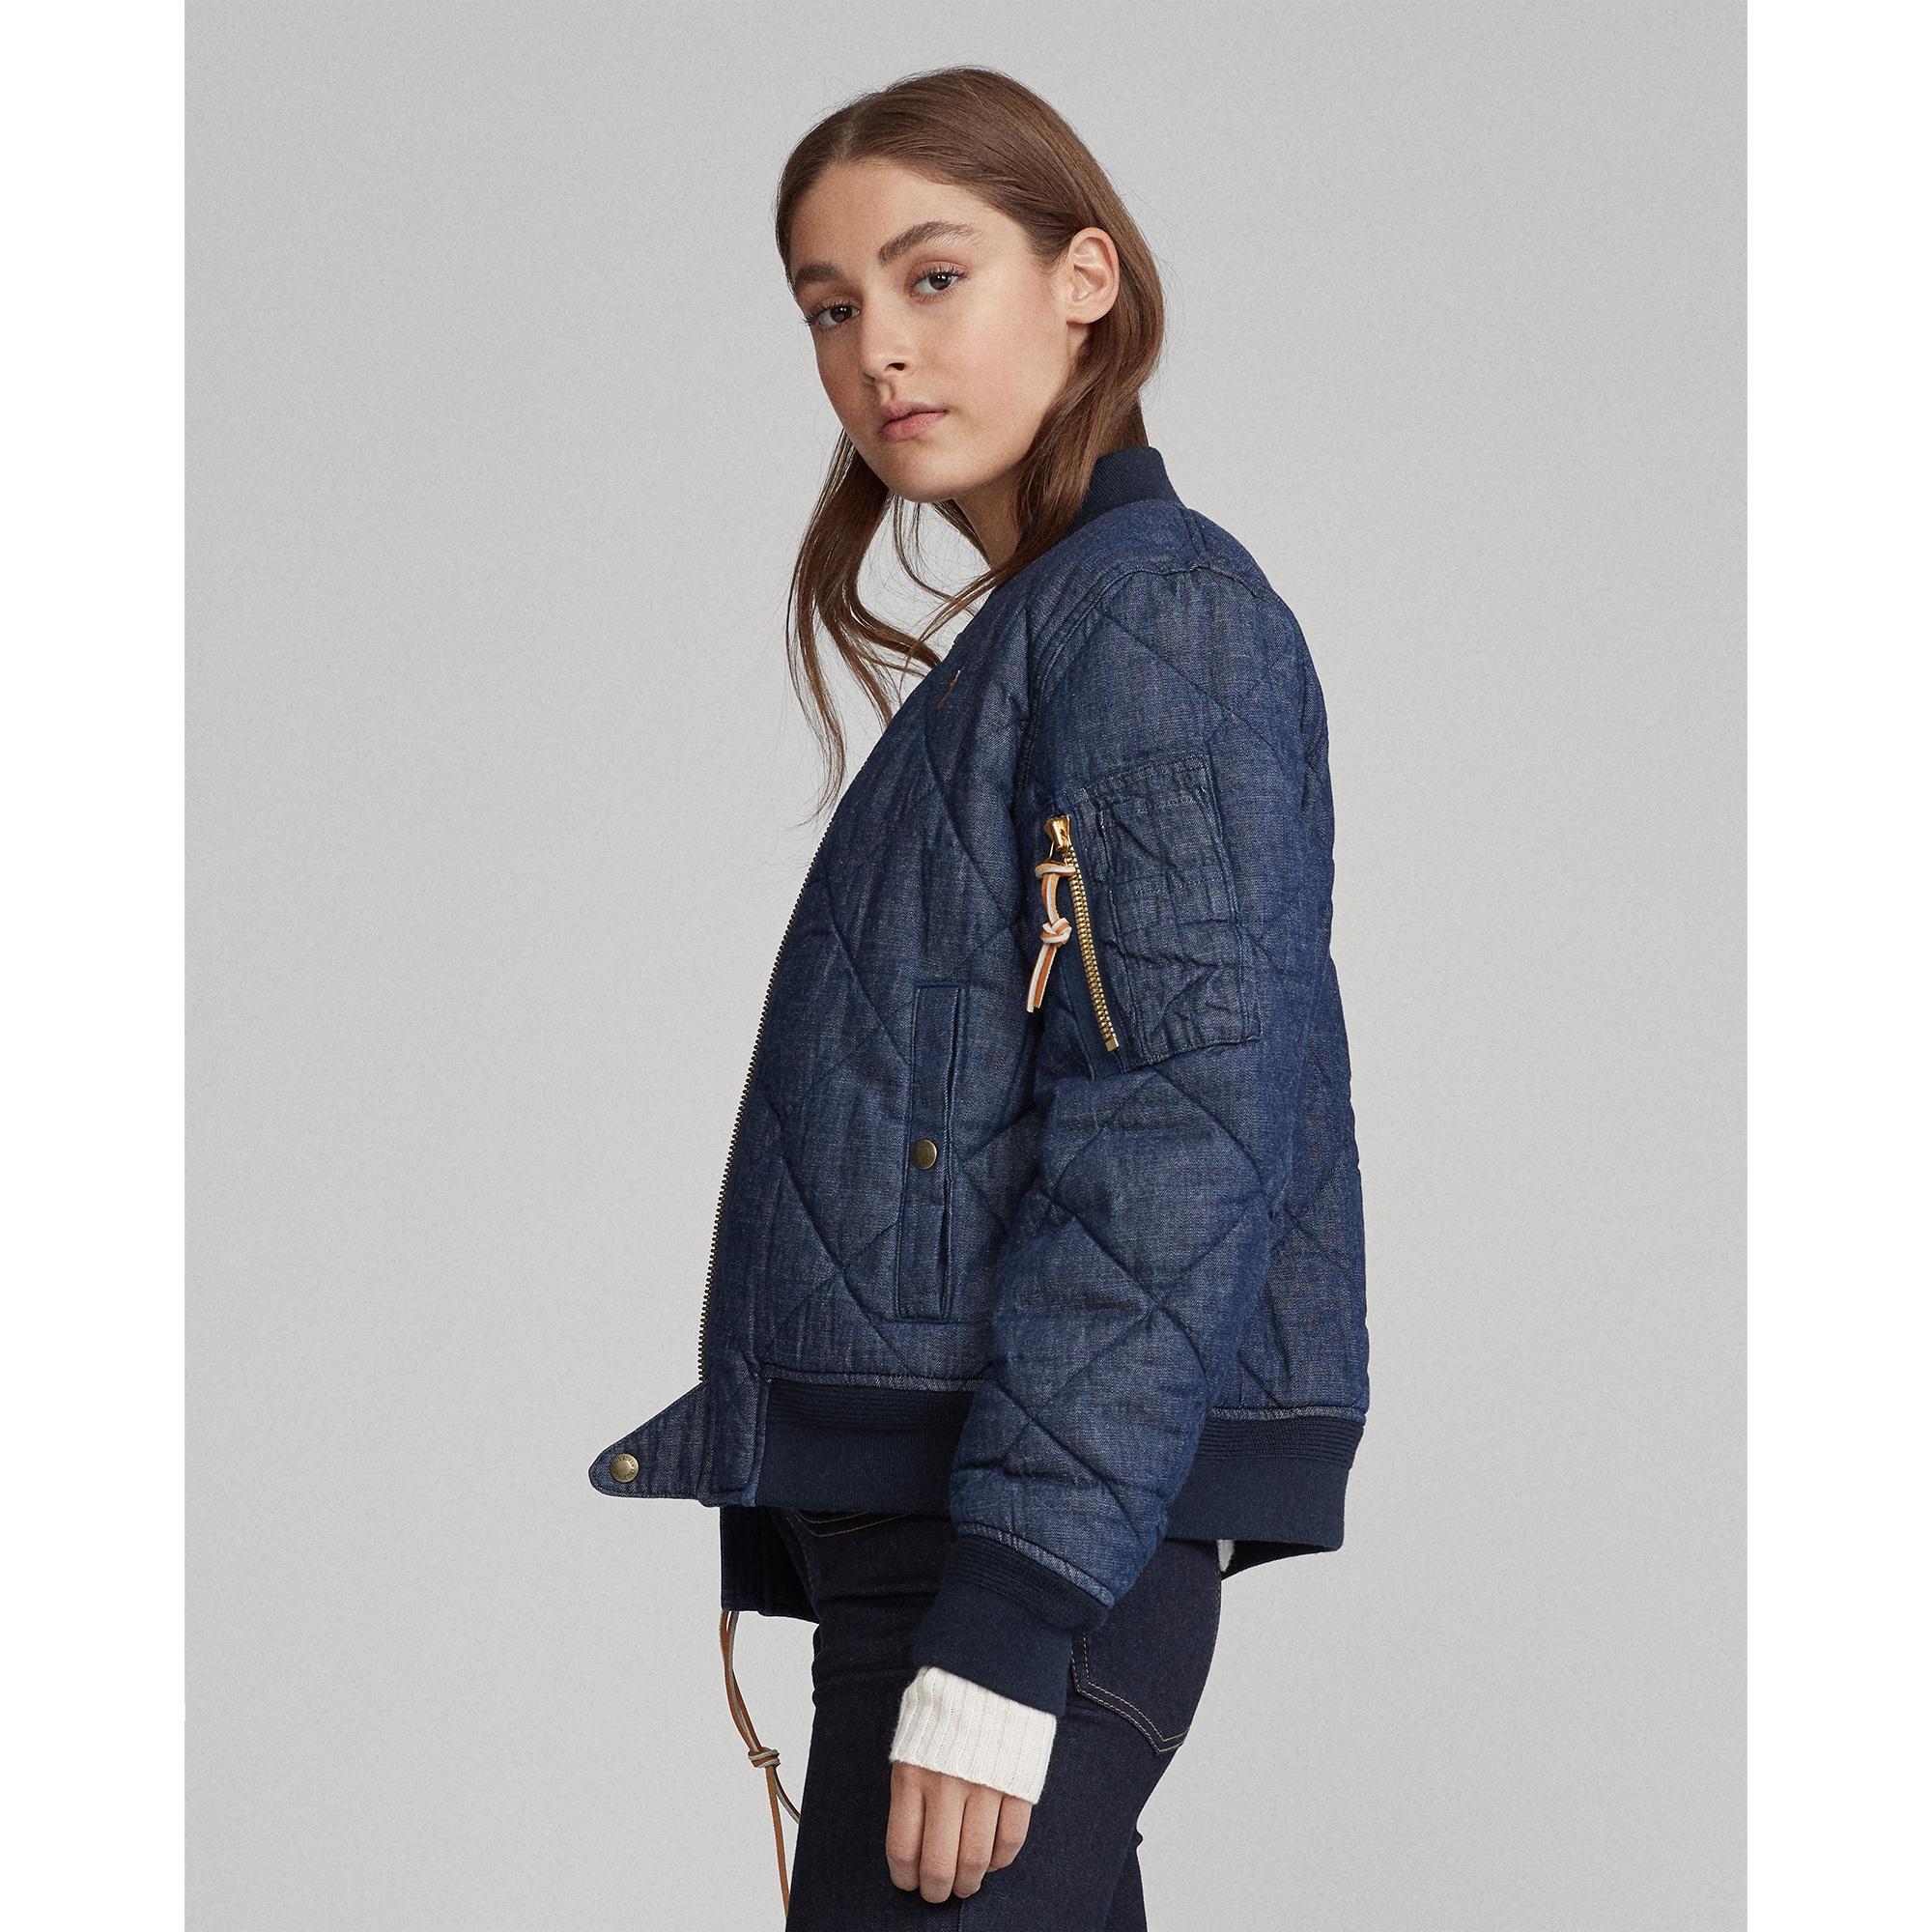 Ralph Lauren Women's Jacket - Blue - M